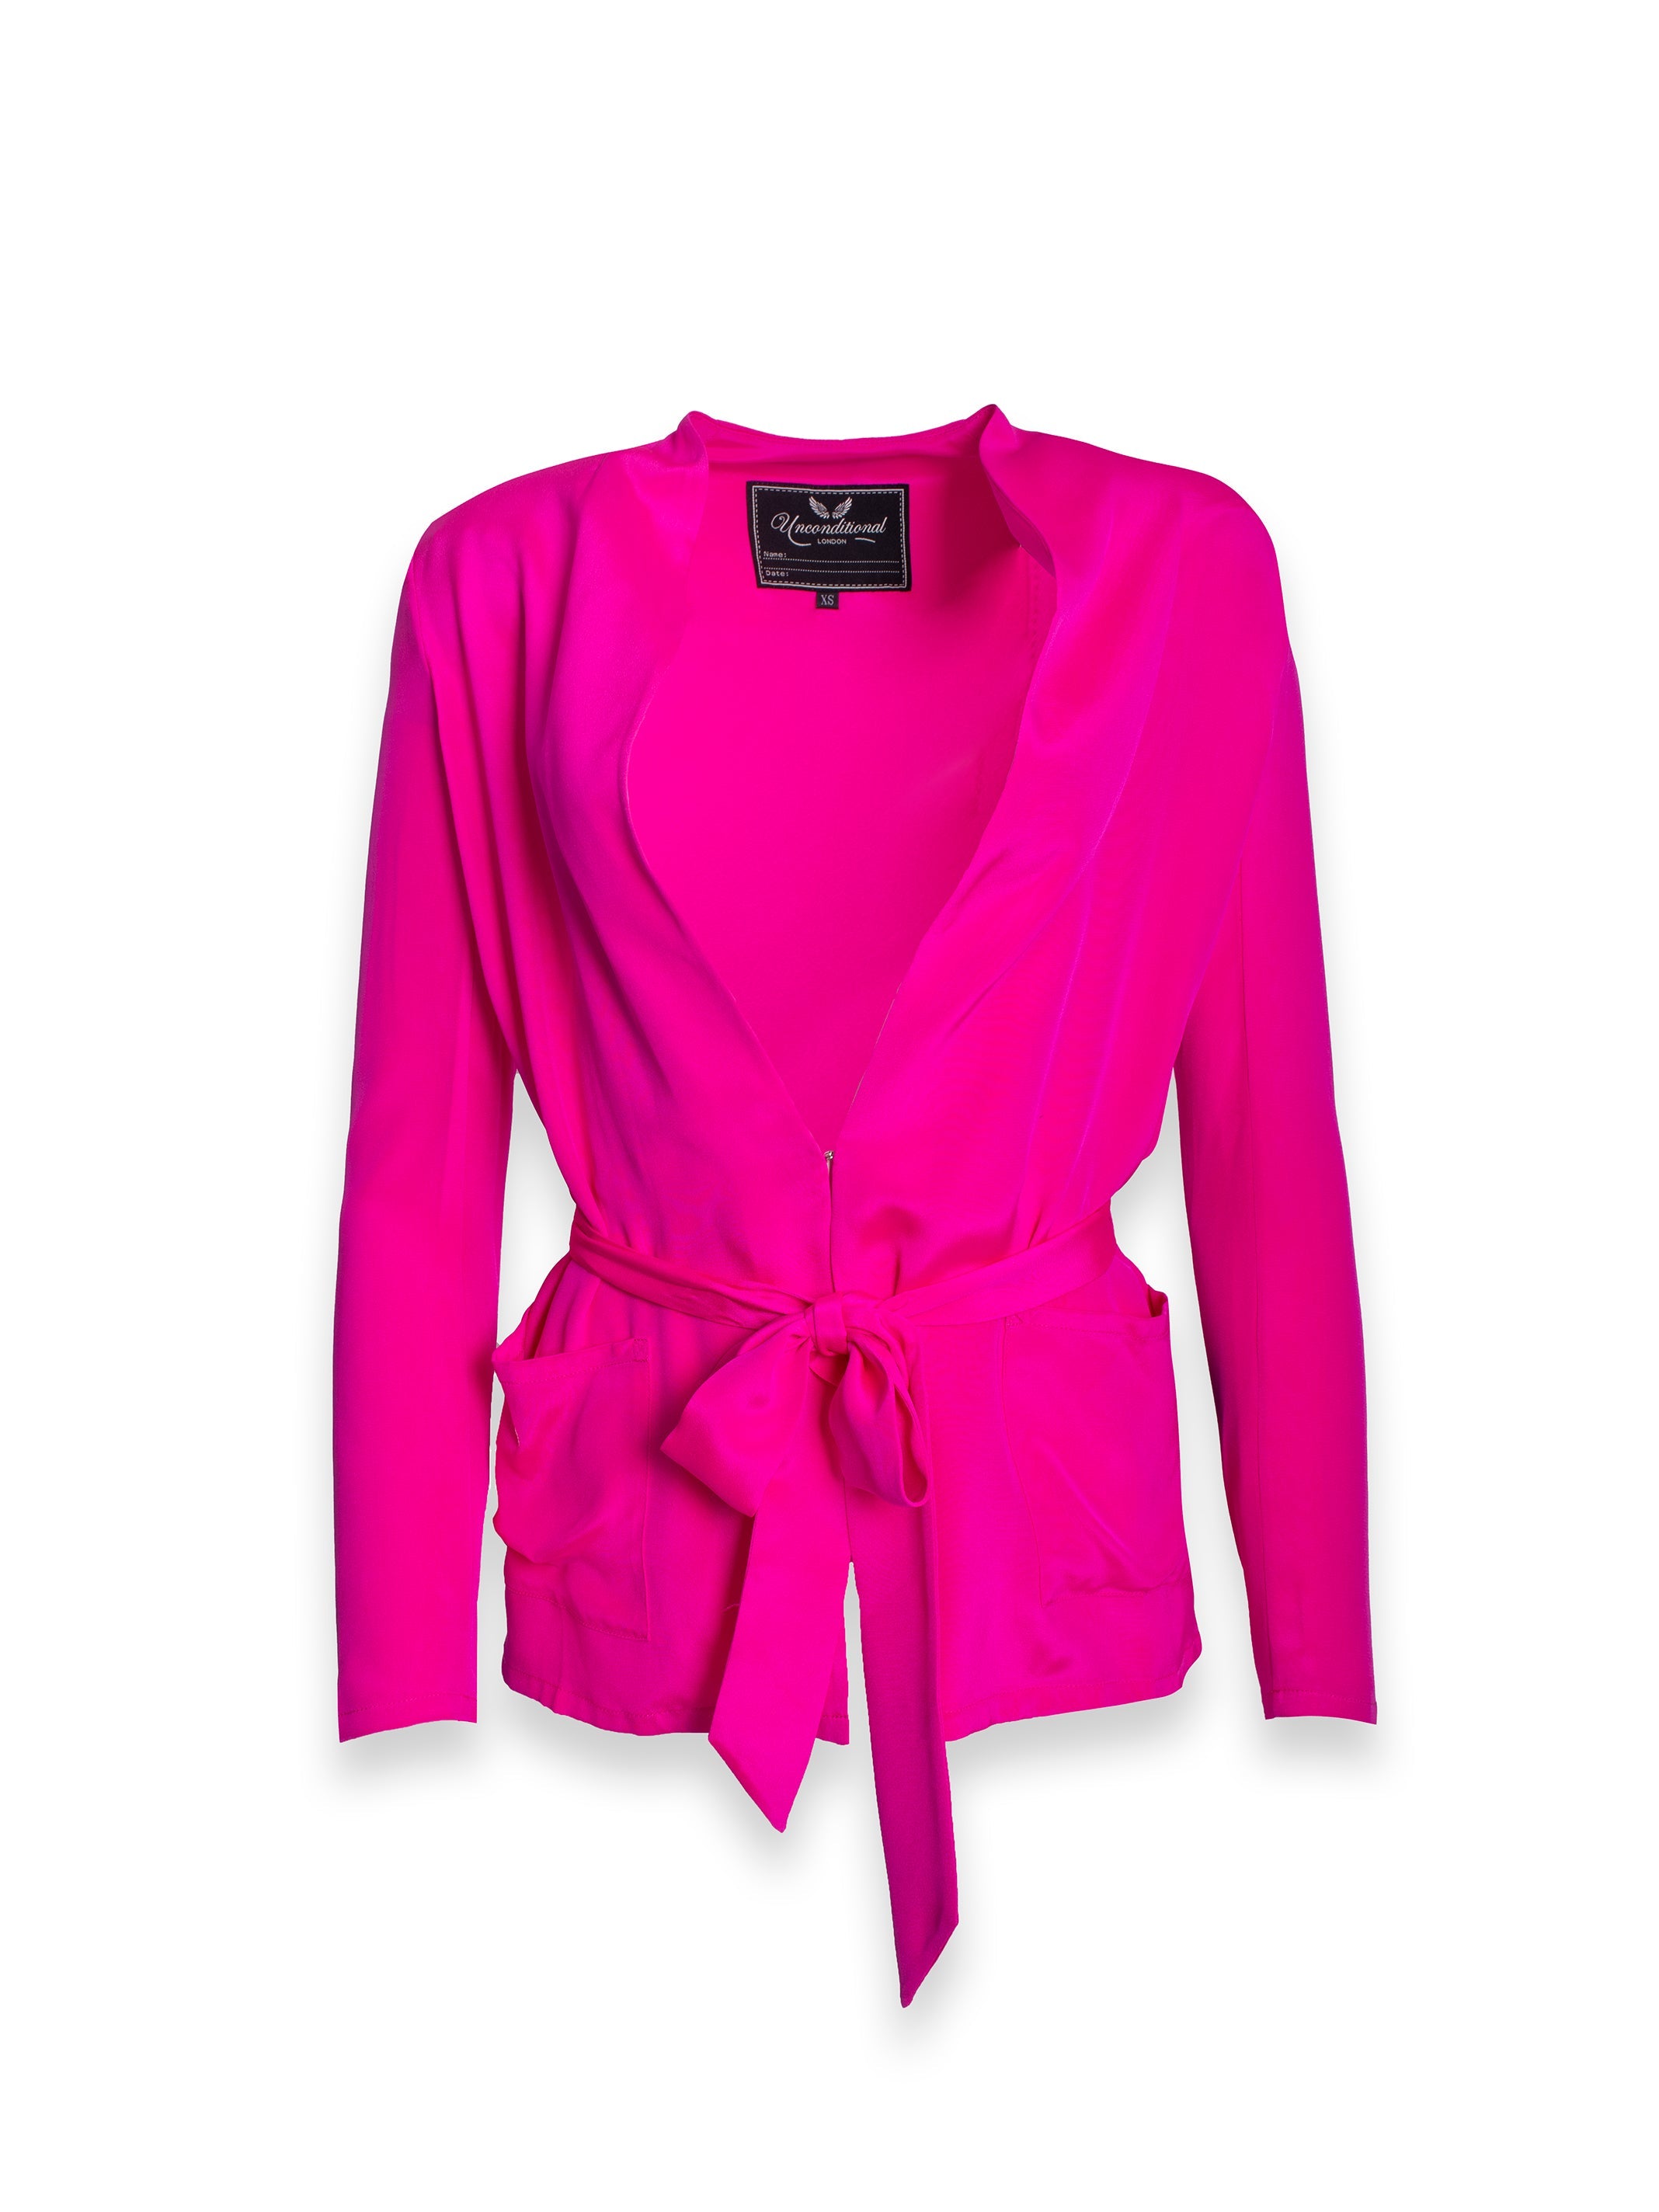 Hot Pink Light Weight Blazer Jacket with Tie Up Detail